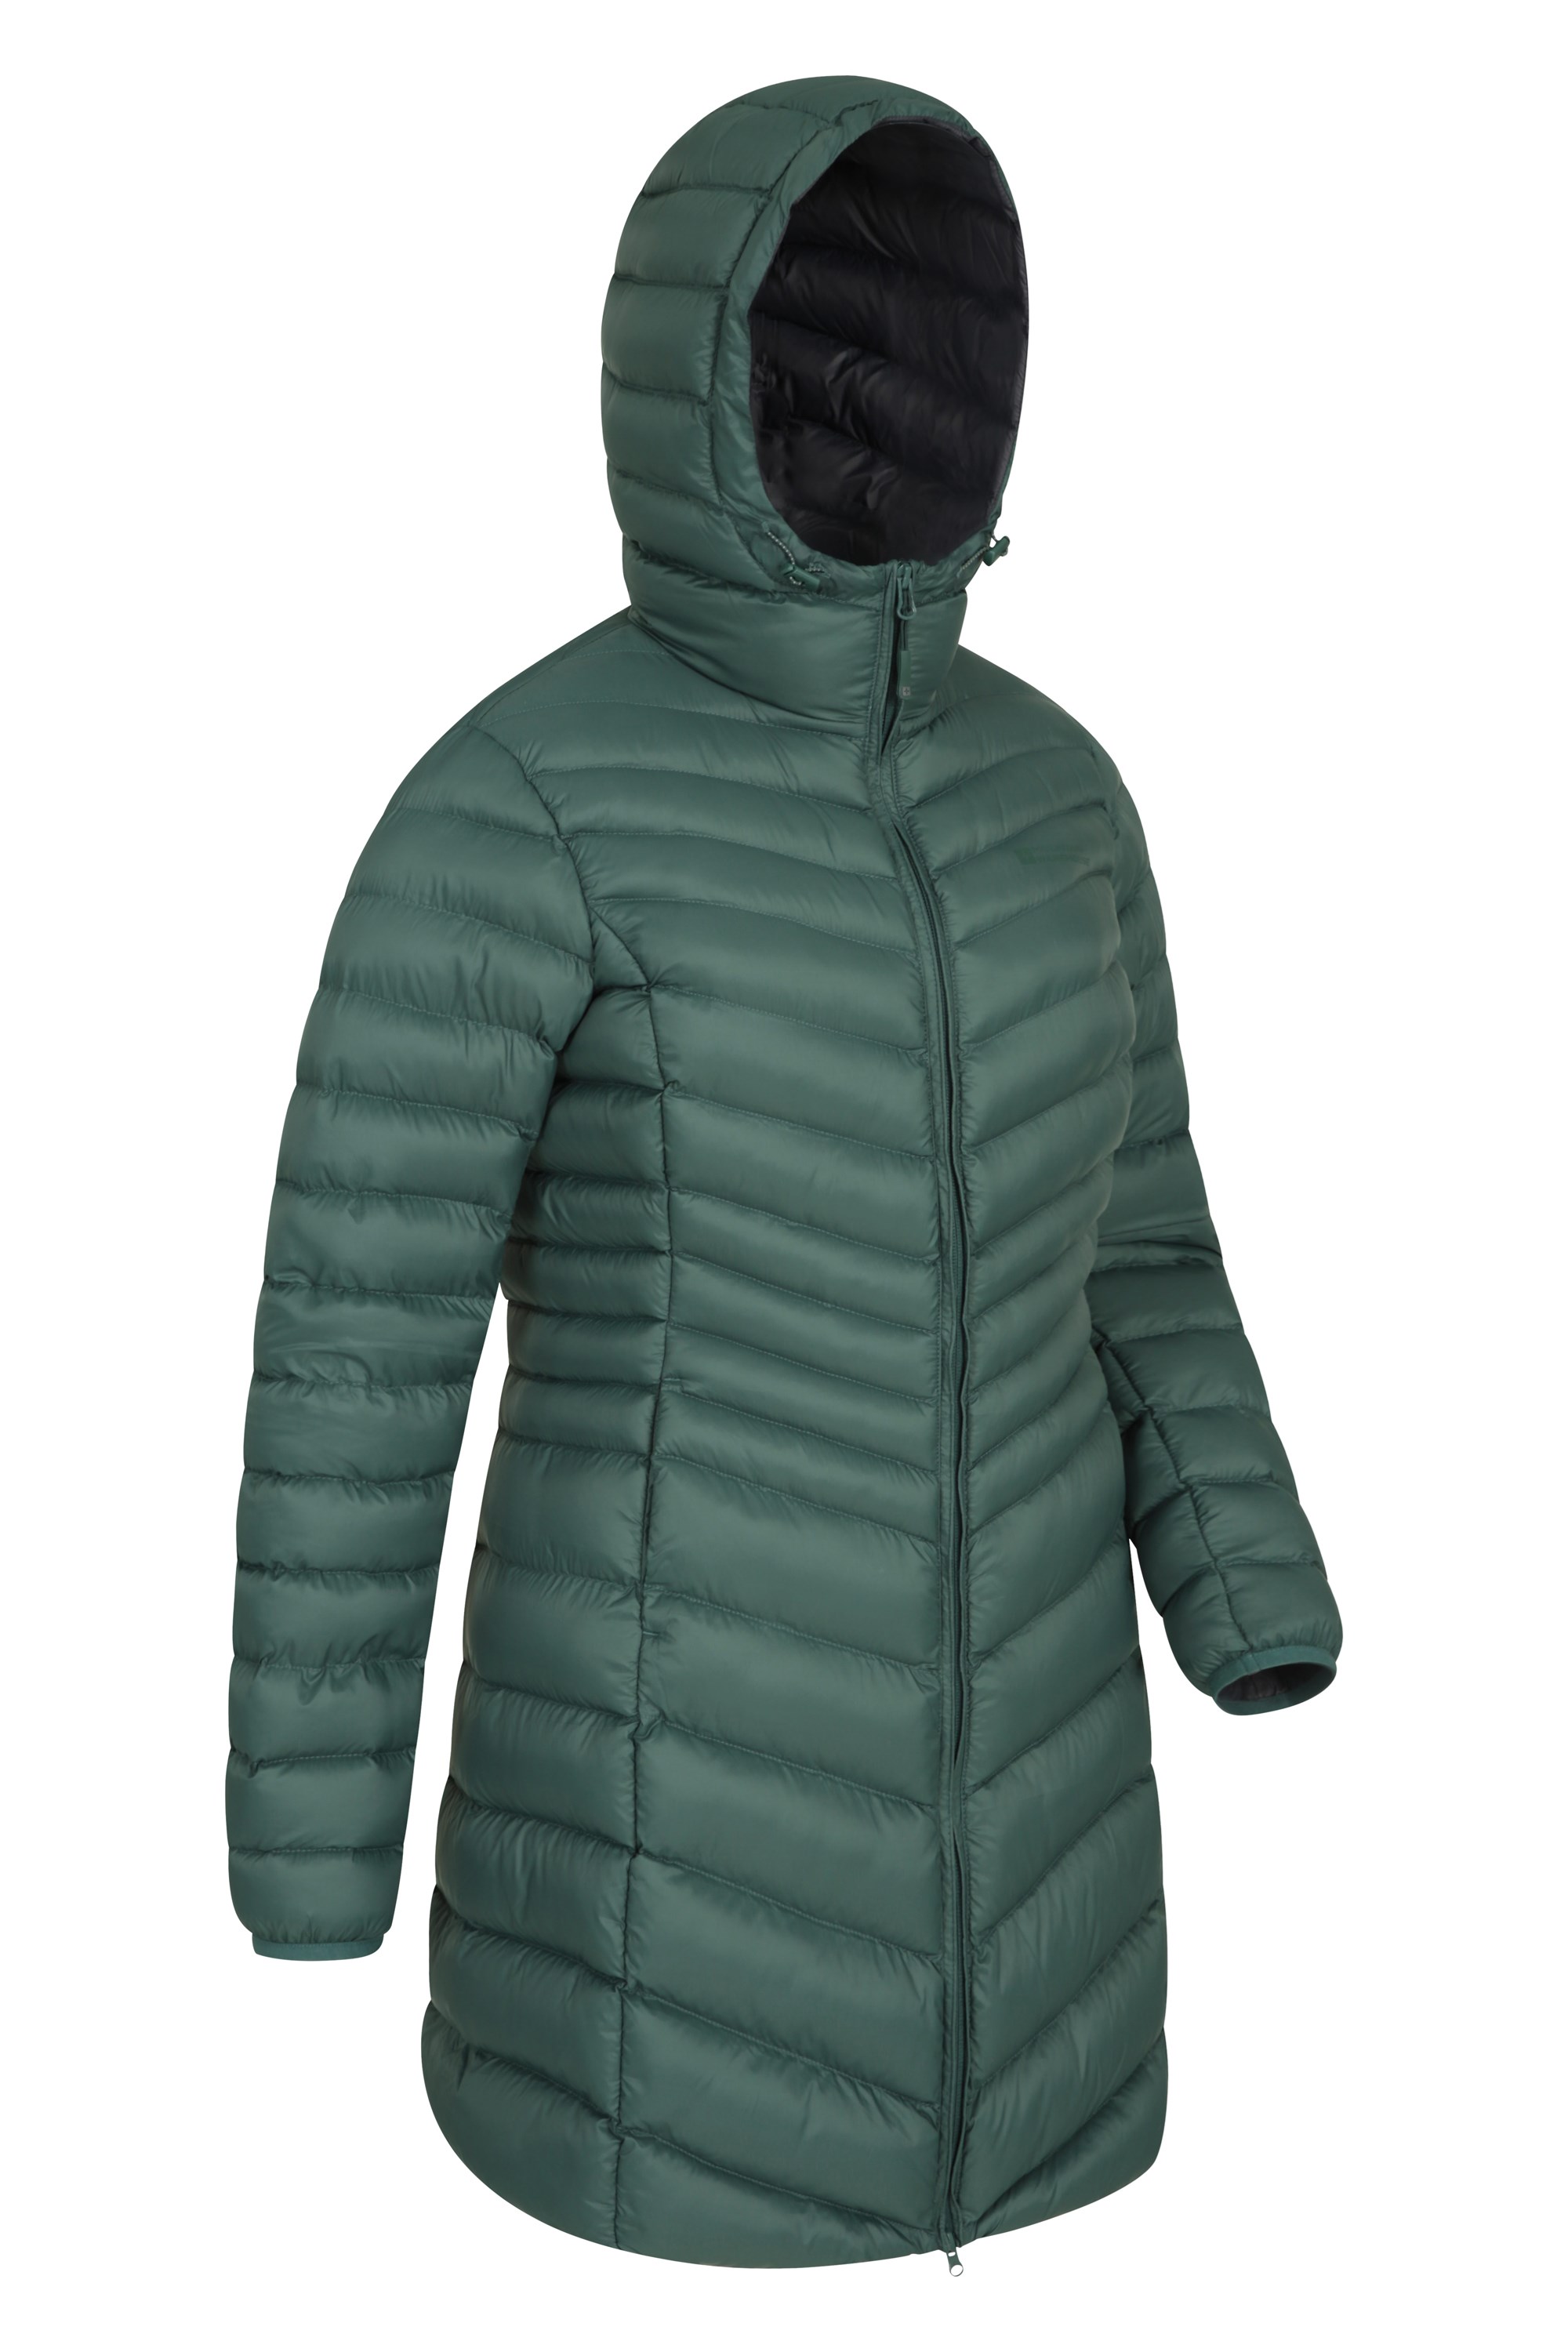 30C Heat Rating Lightweight Ladies Jacket Warm for Outdoors Walking Water Resistant Rain Coat Mountain Warehouse Florence Womens Winter Long Padded Jacket